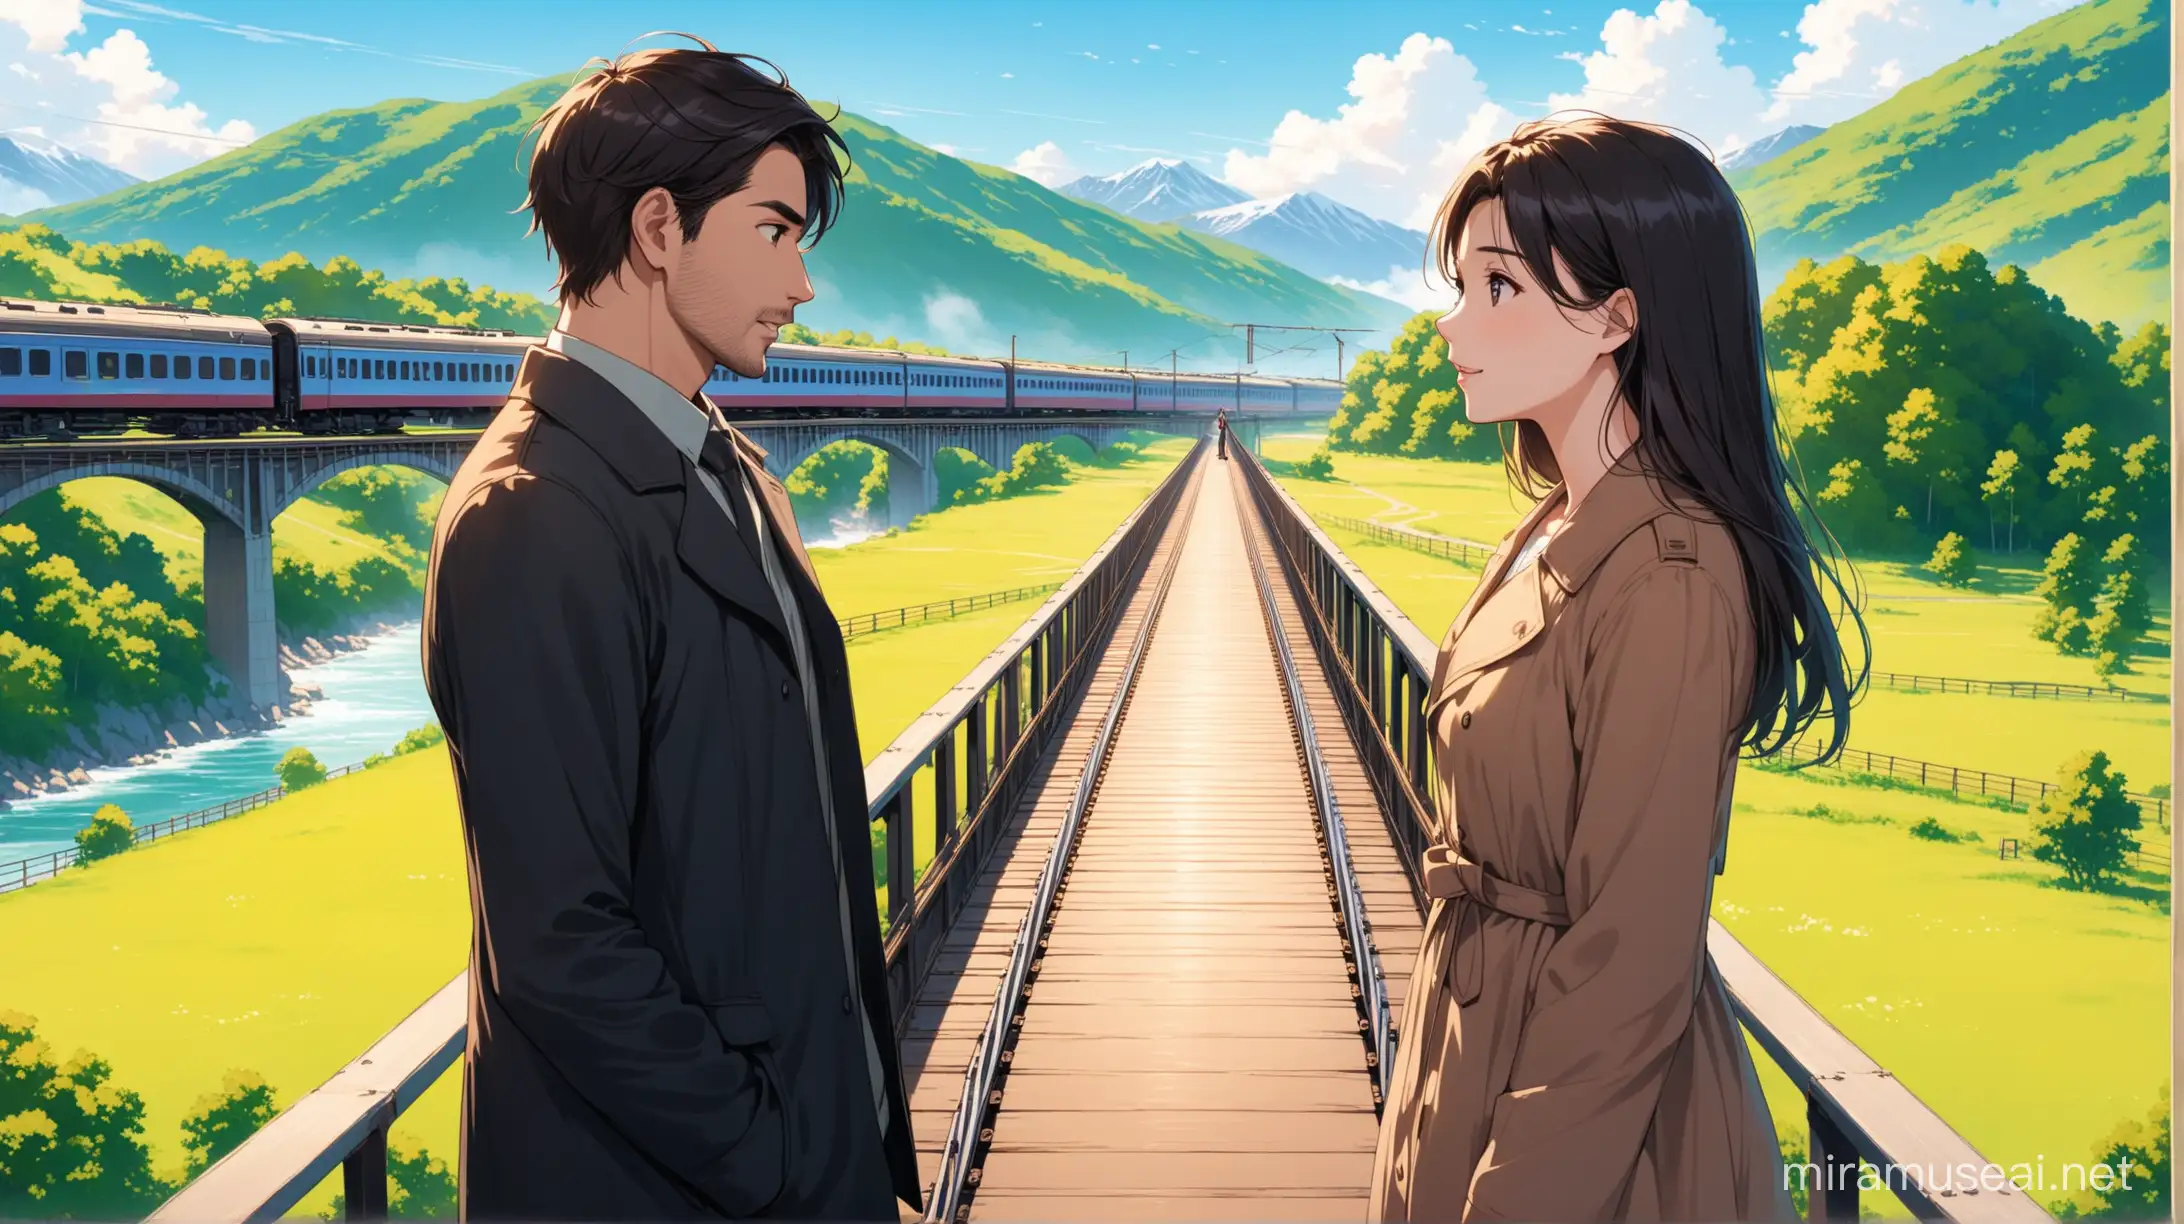 Couple Conversing on Bridge Overlooking Scenic Train Journey